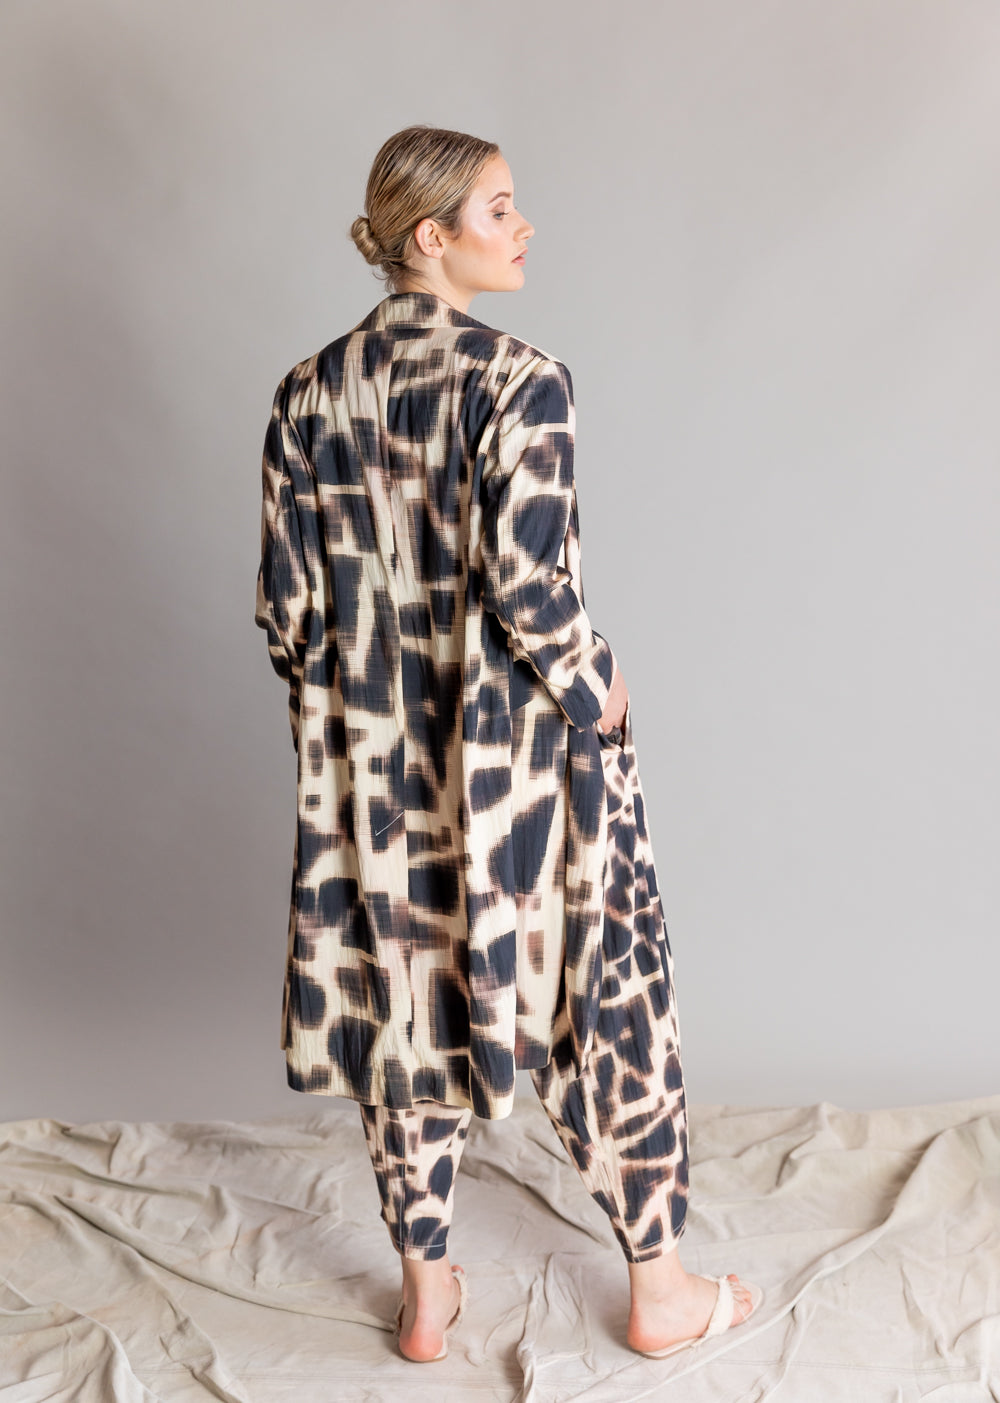 Giraffe frock coat